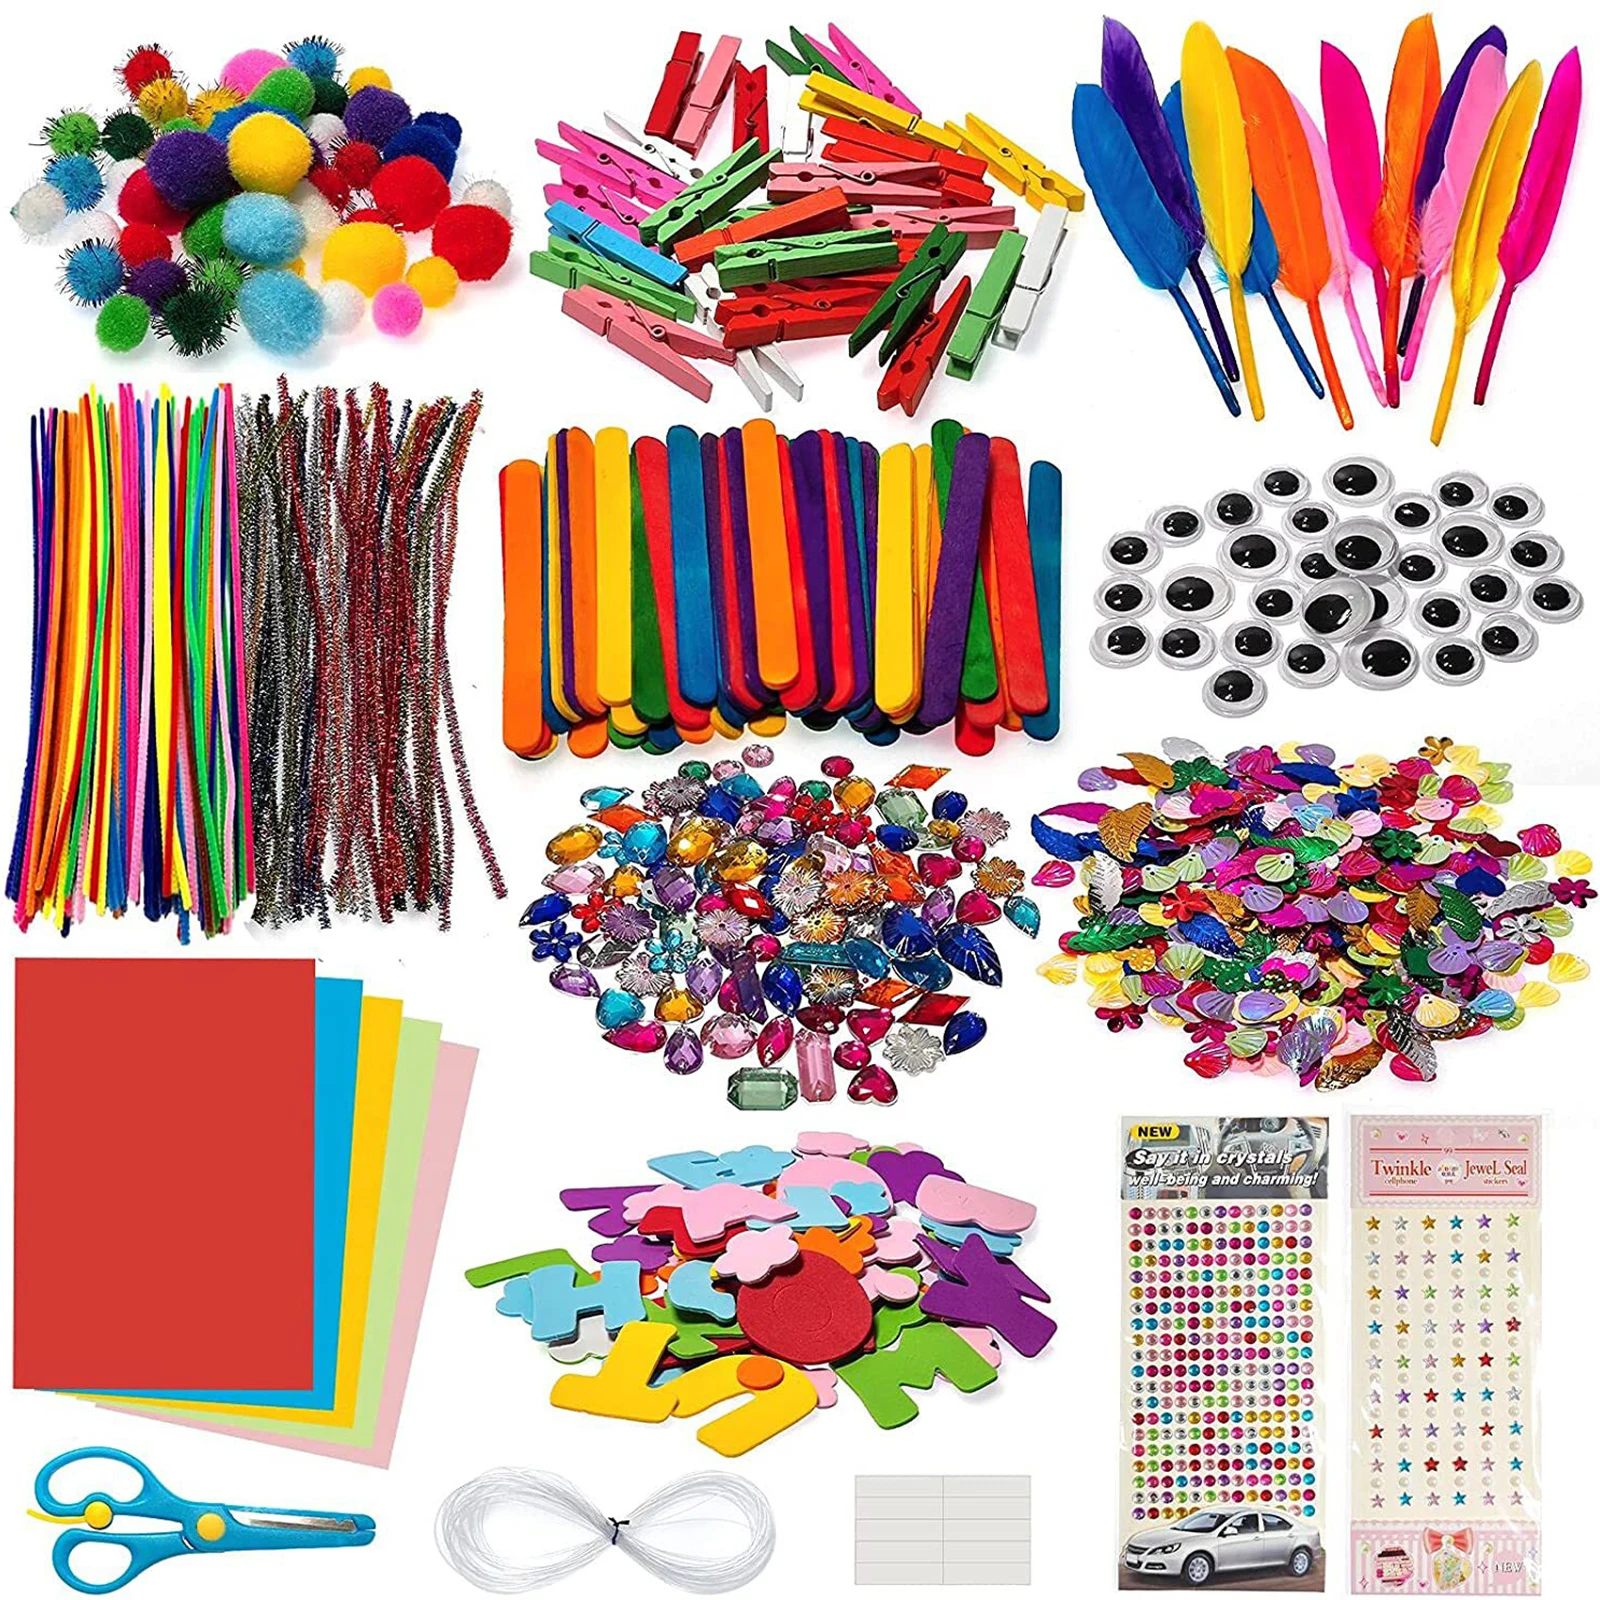 1200 Pieces Plush Balls Eyes DIY Art Craft Toys Plush Stick Pom Poms Rainbow Colors Educational Creativity for Kid